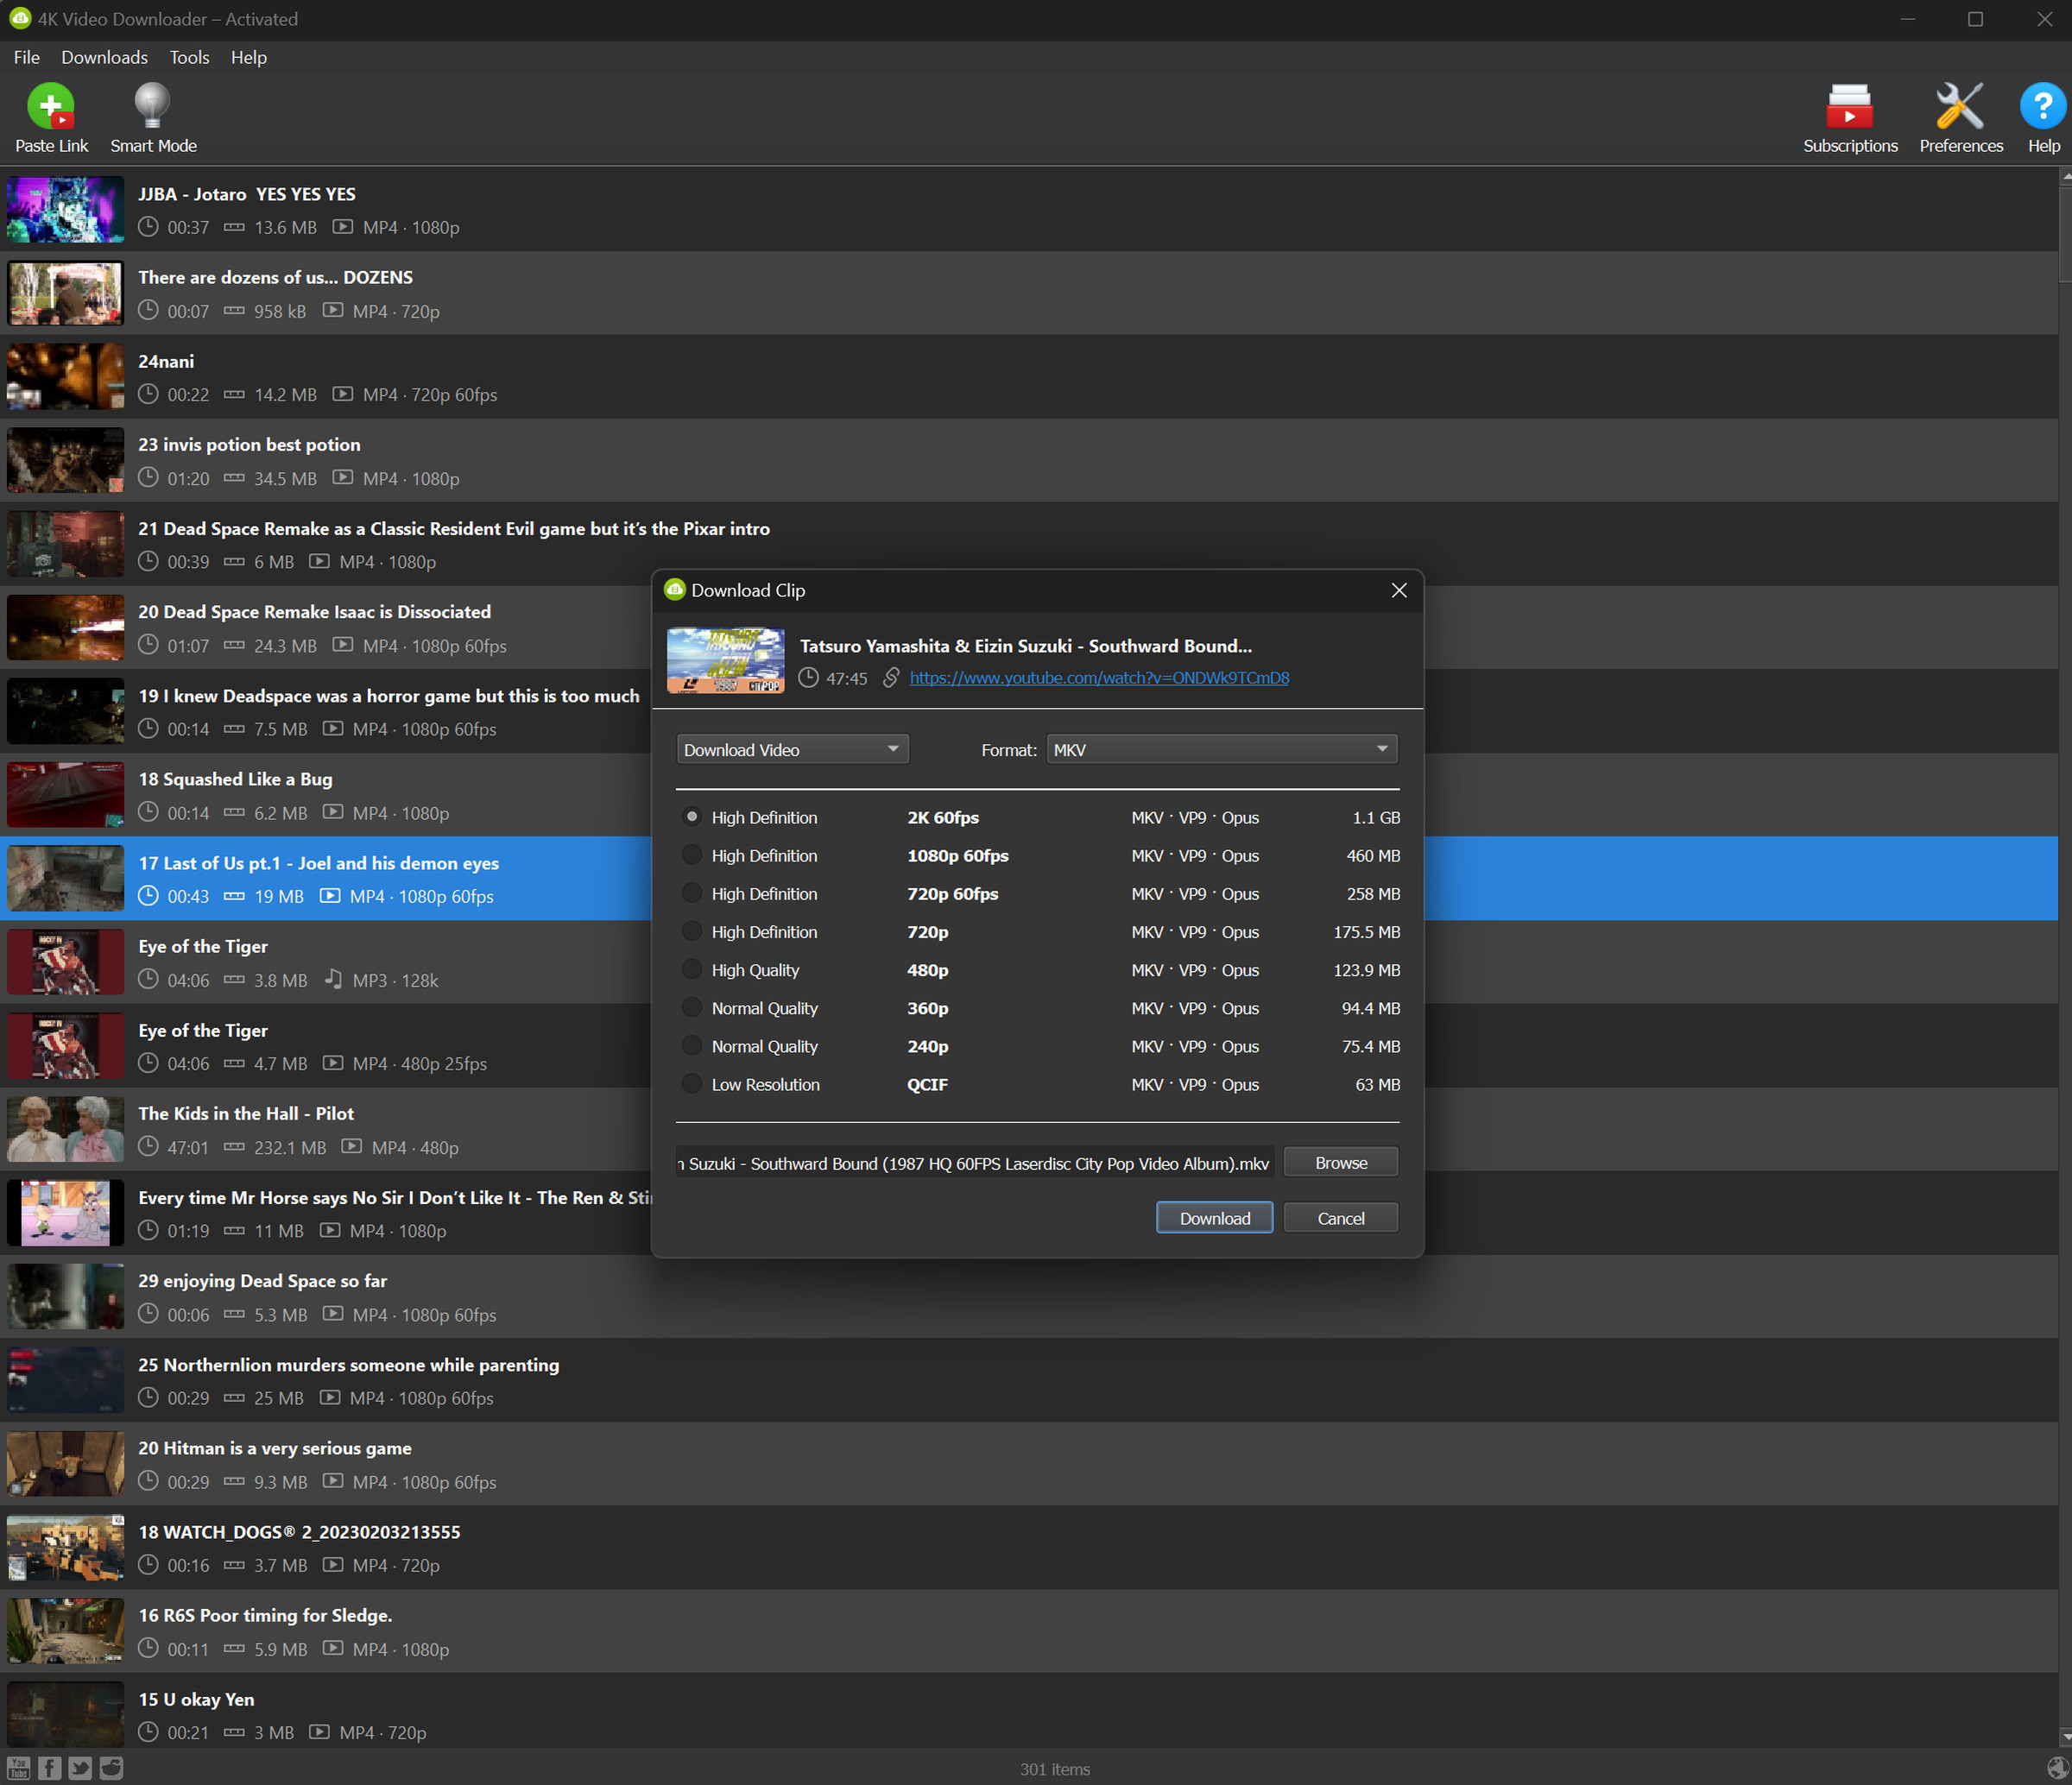 An interface showing 4k Video Downloader downloading a 1440p copy of Tatsuro Yamashita &amp; Eizin Suzuki - Southward Bound from YouTube.